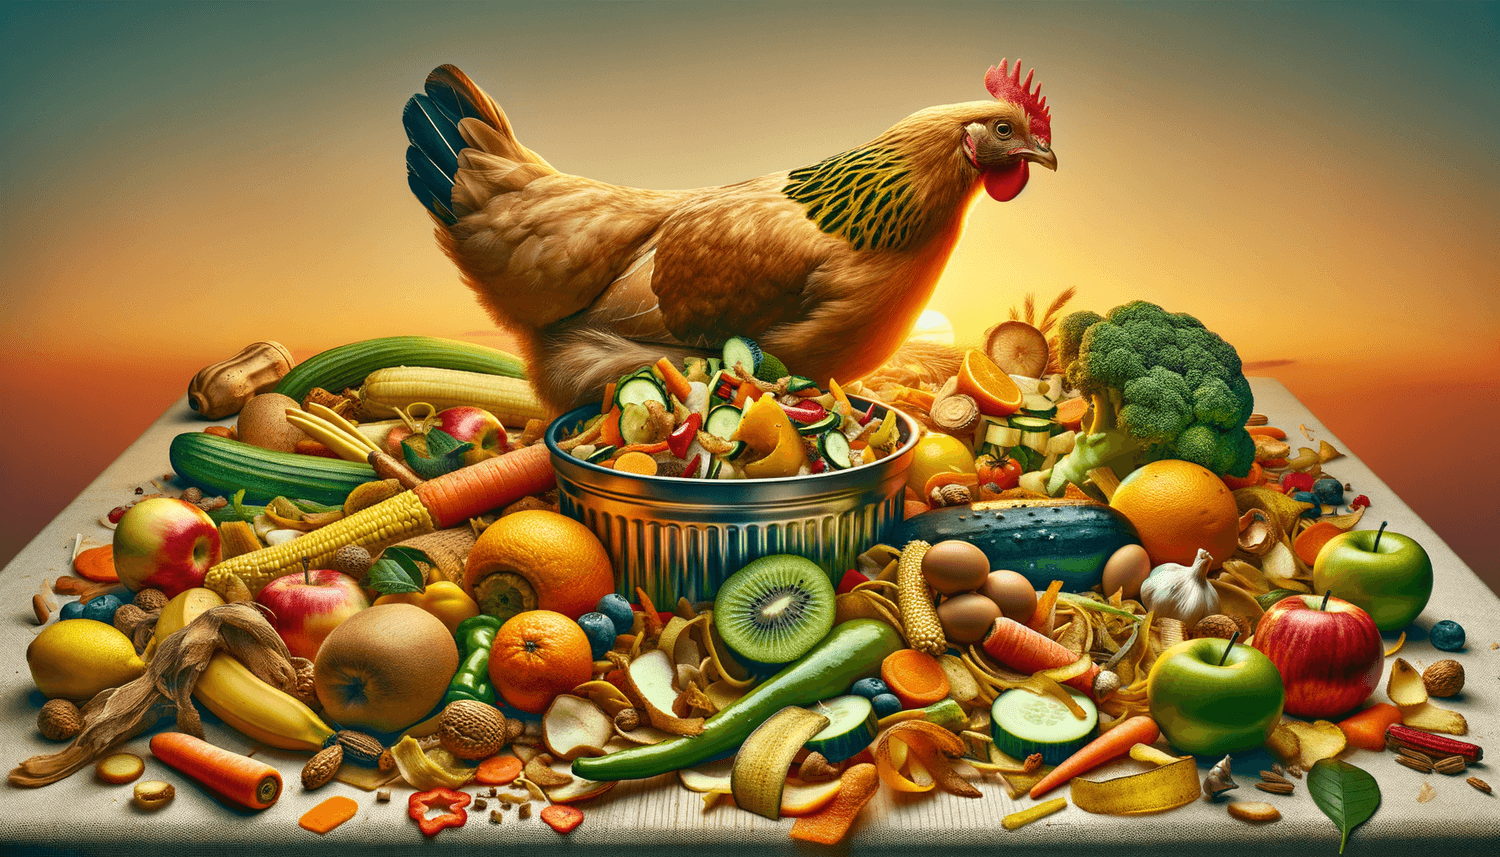 Can Chickens Eat Kitchen Scraps?